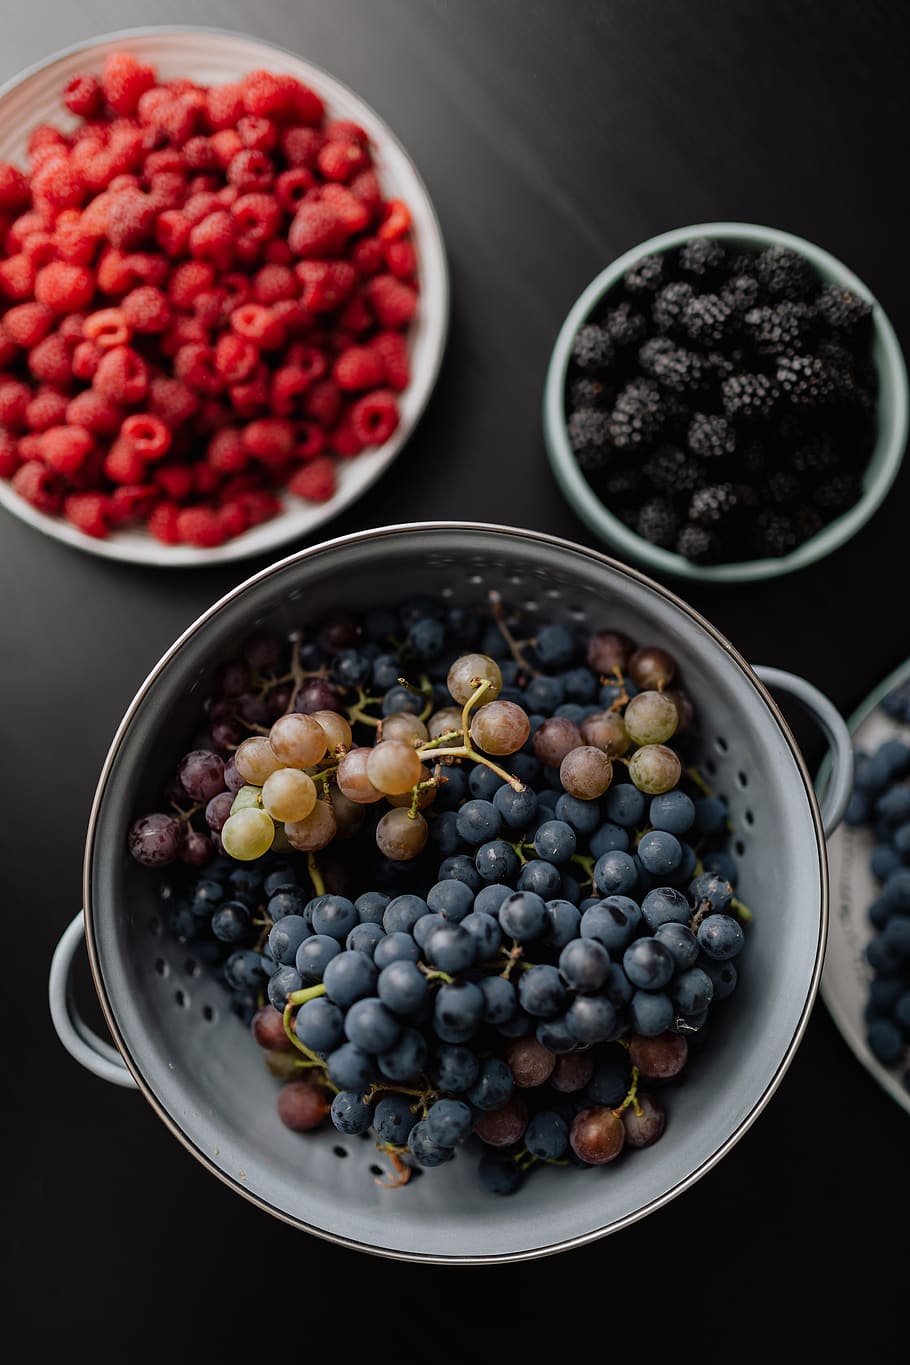 buah-buahan, beri, sehat, ramah lingkungan, vegan, Anggur, blackberry, raspberry, makanan, makanan dan minuman